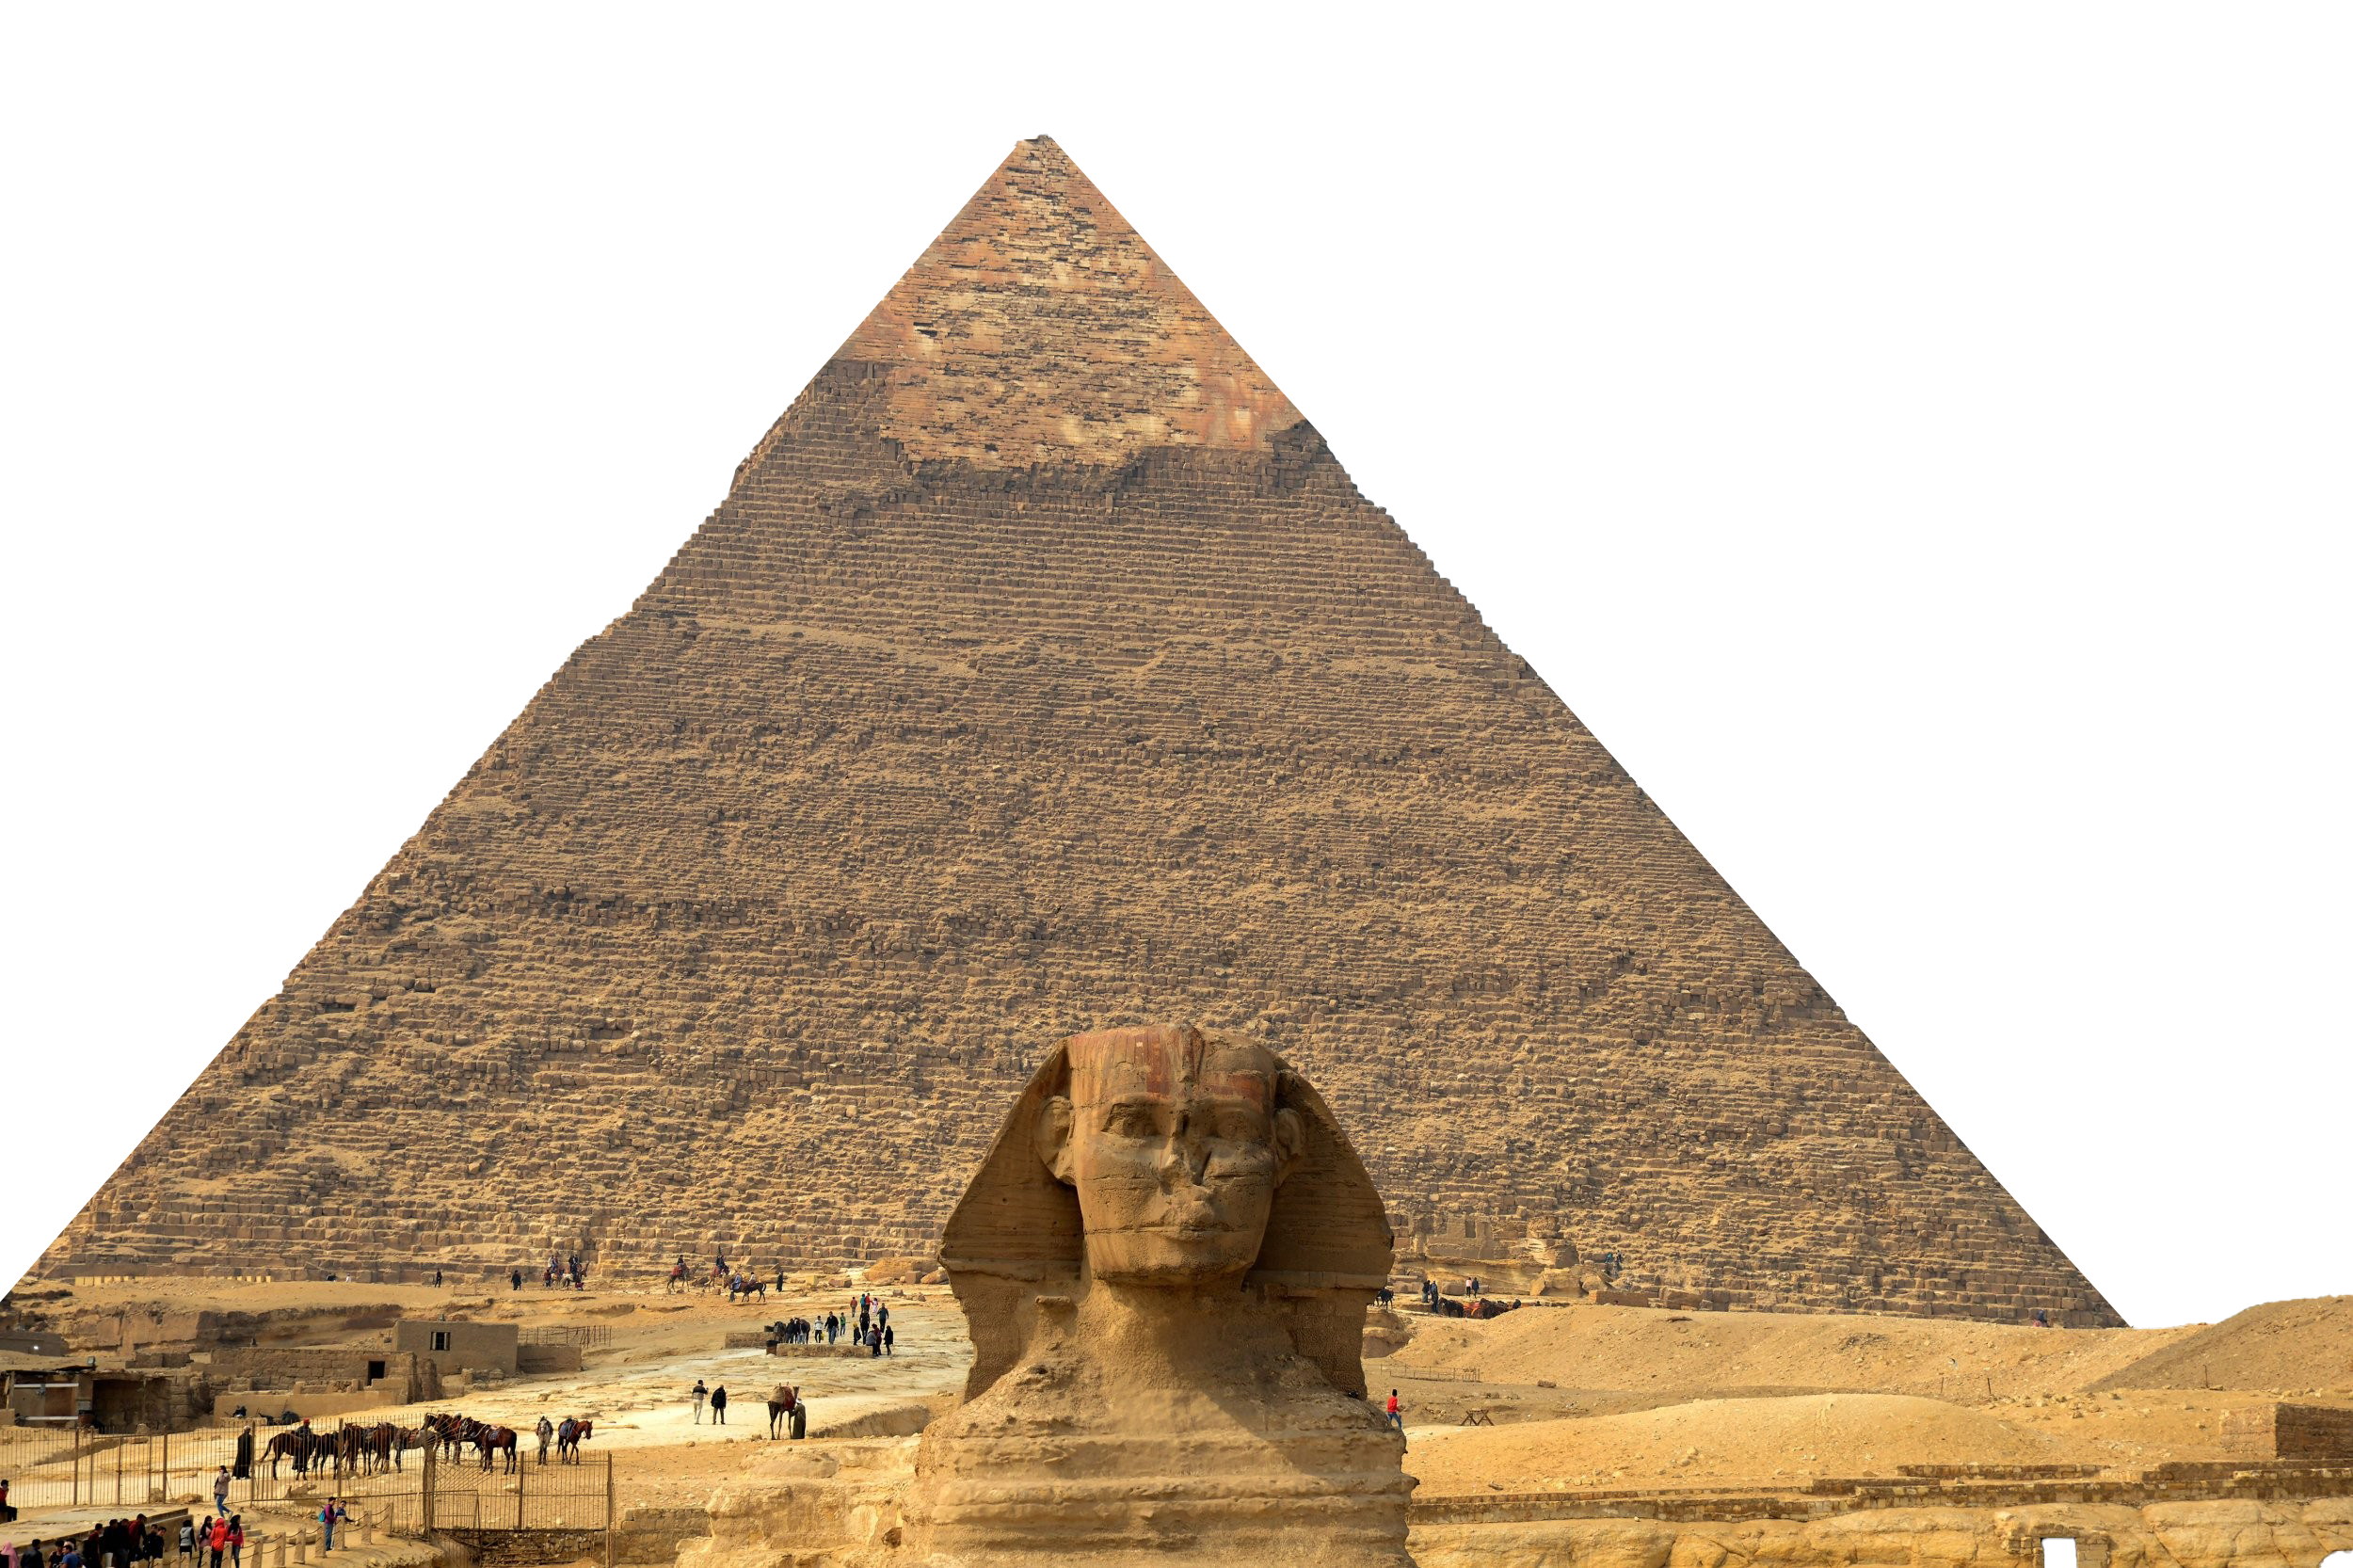 Mesir piramida PNG Gambar berkualitas tinggi